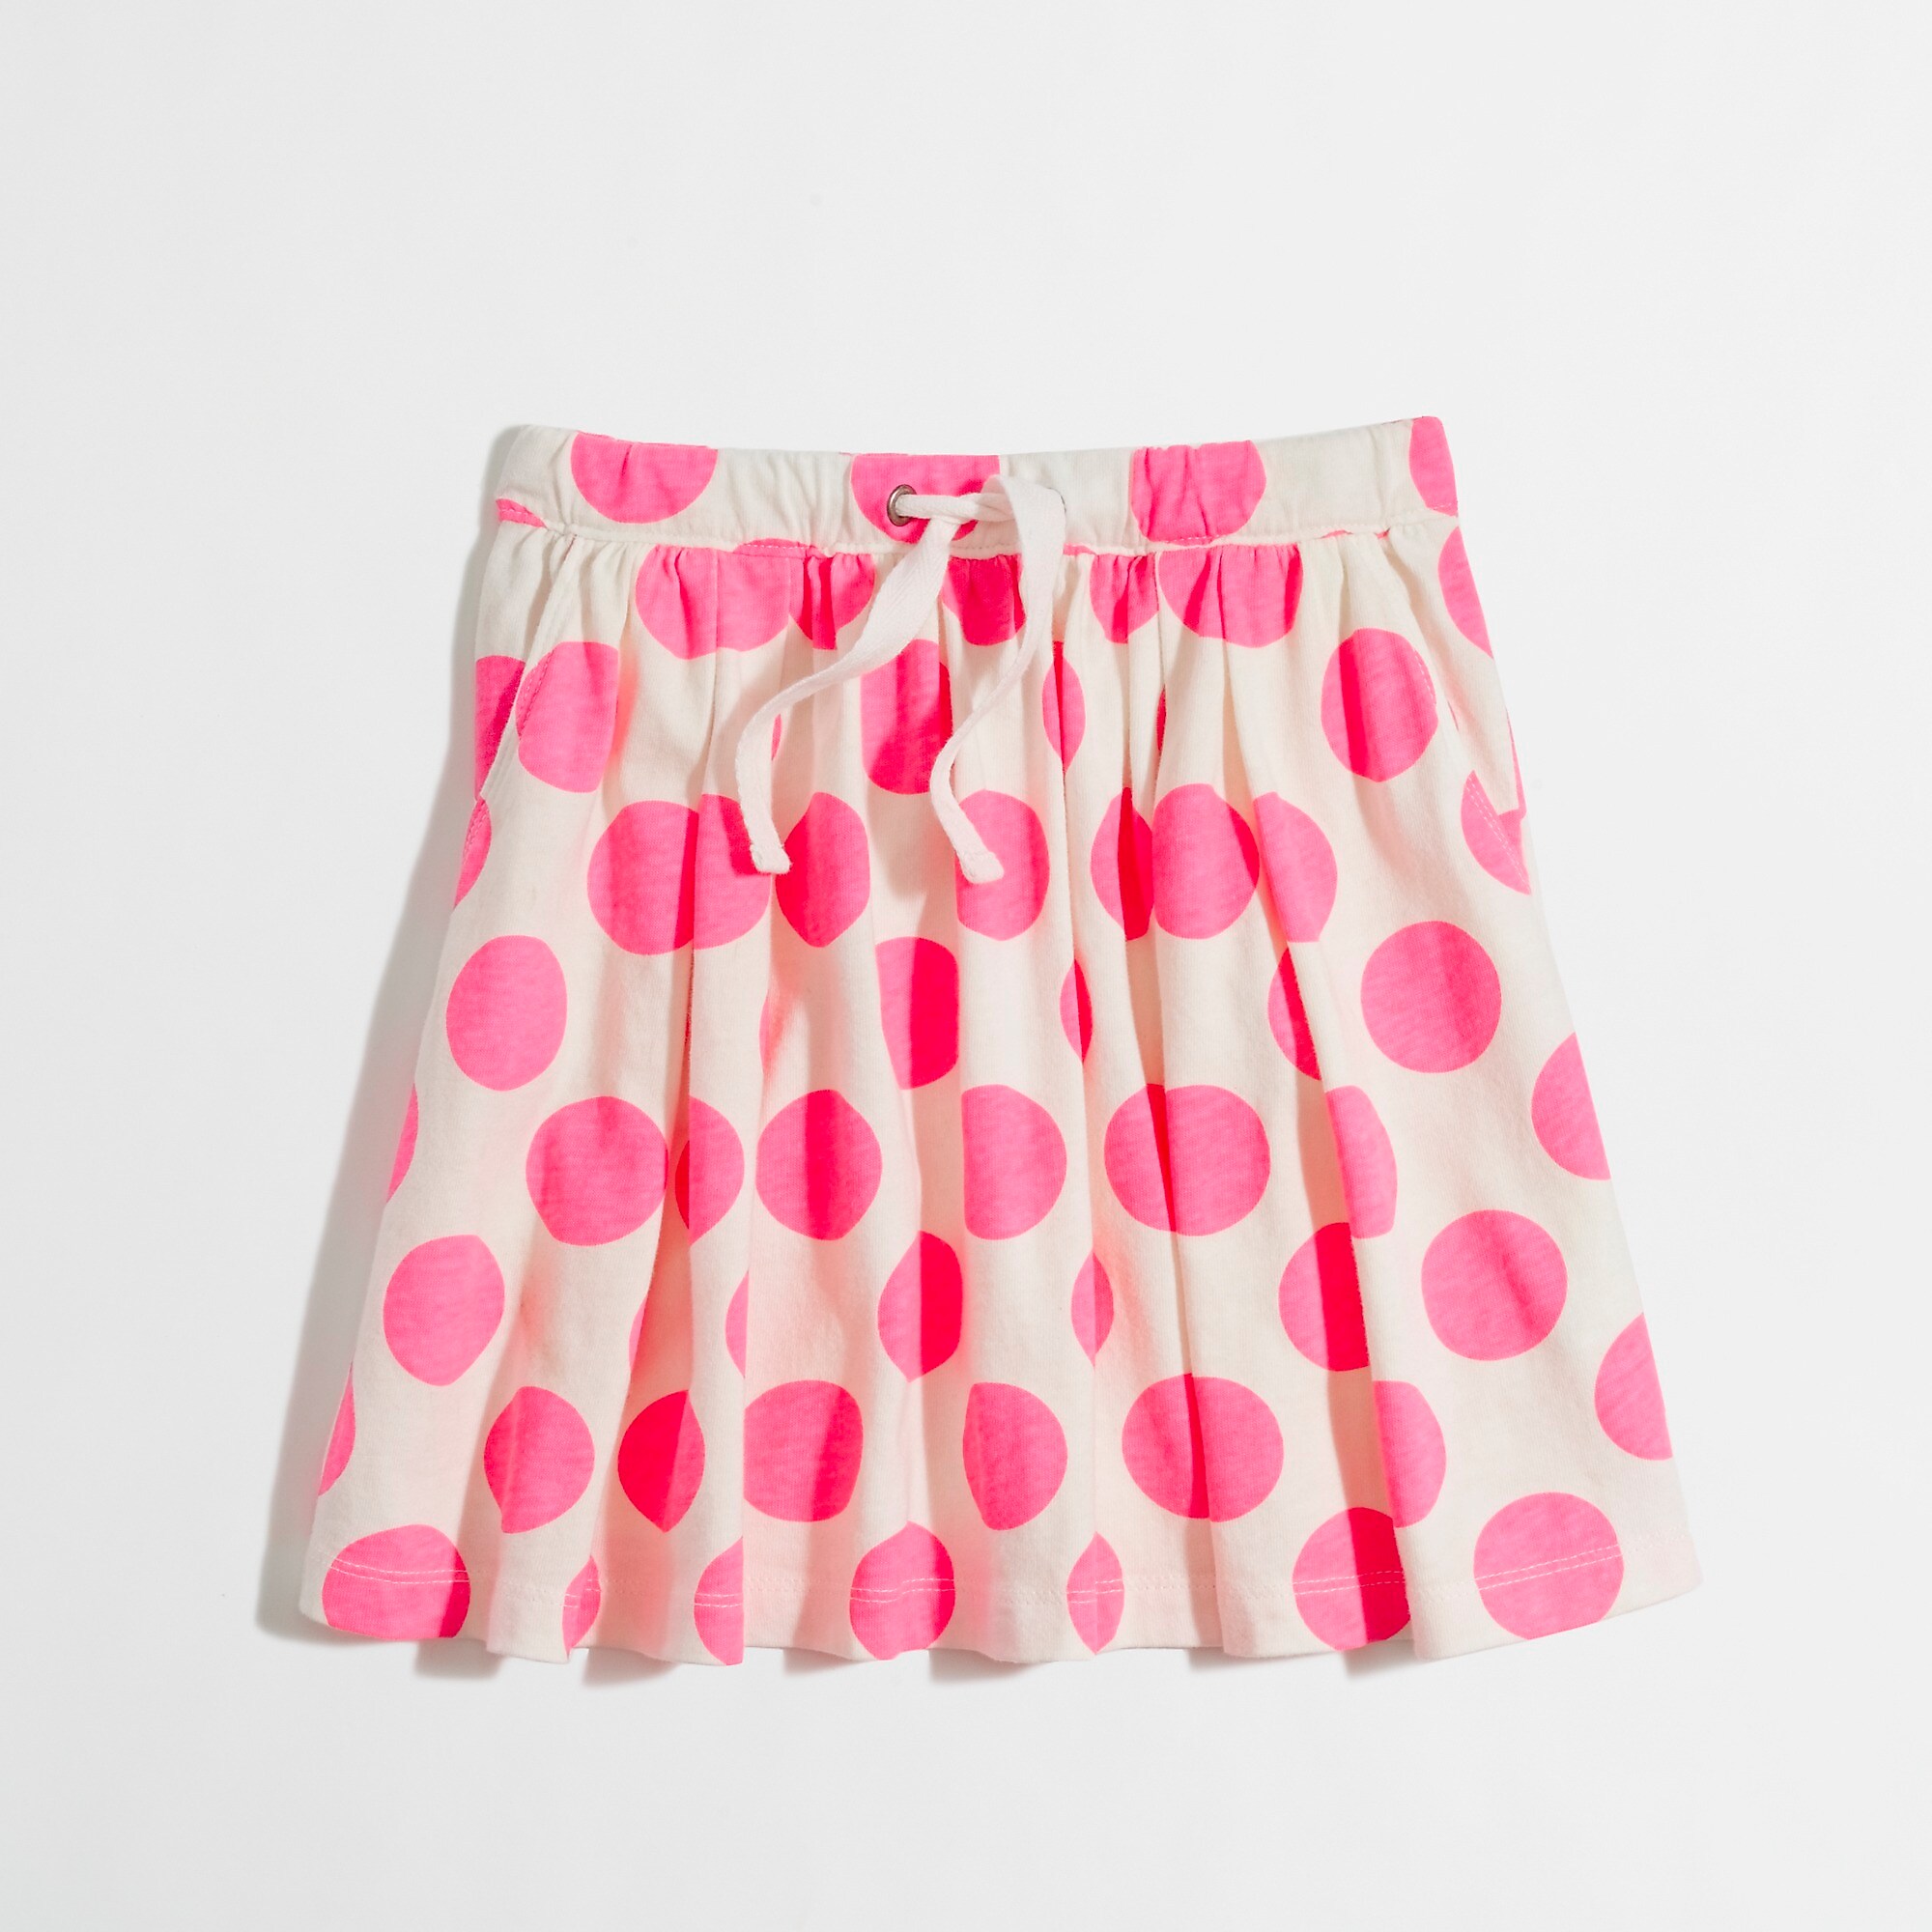 Factory girls' polka-dot drawstring skirt : FactoryGirls Skirts | Factory